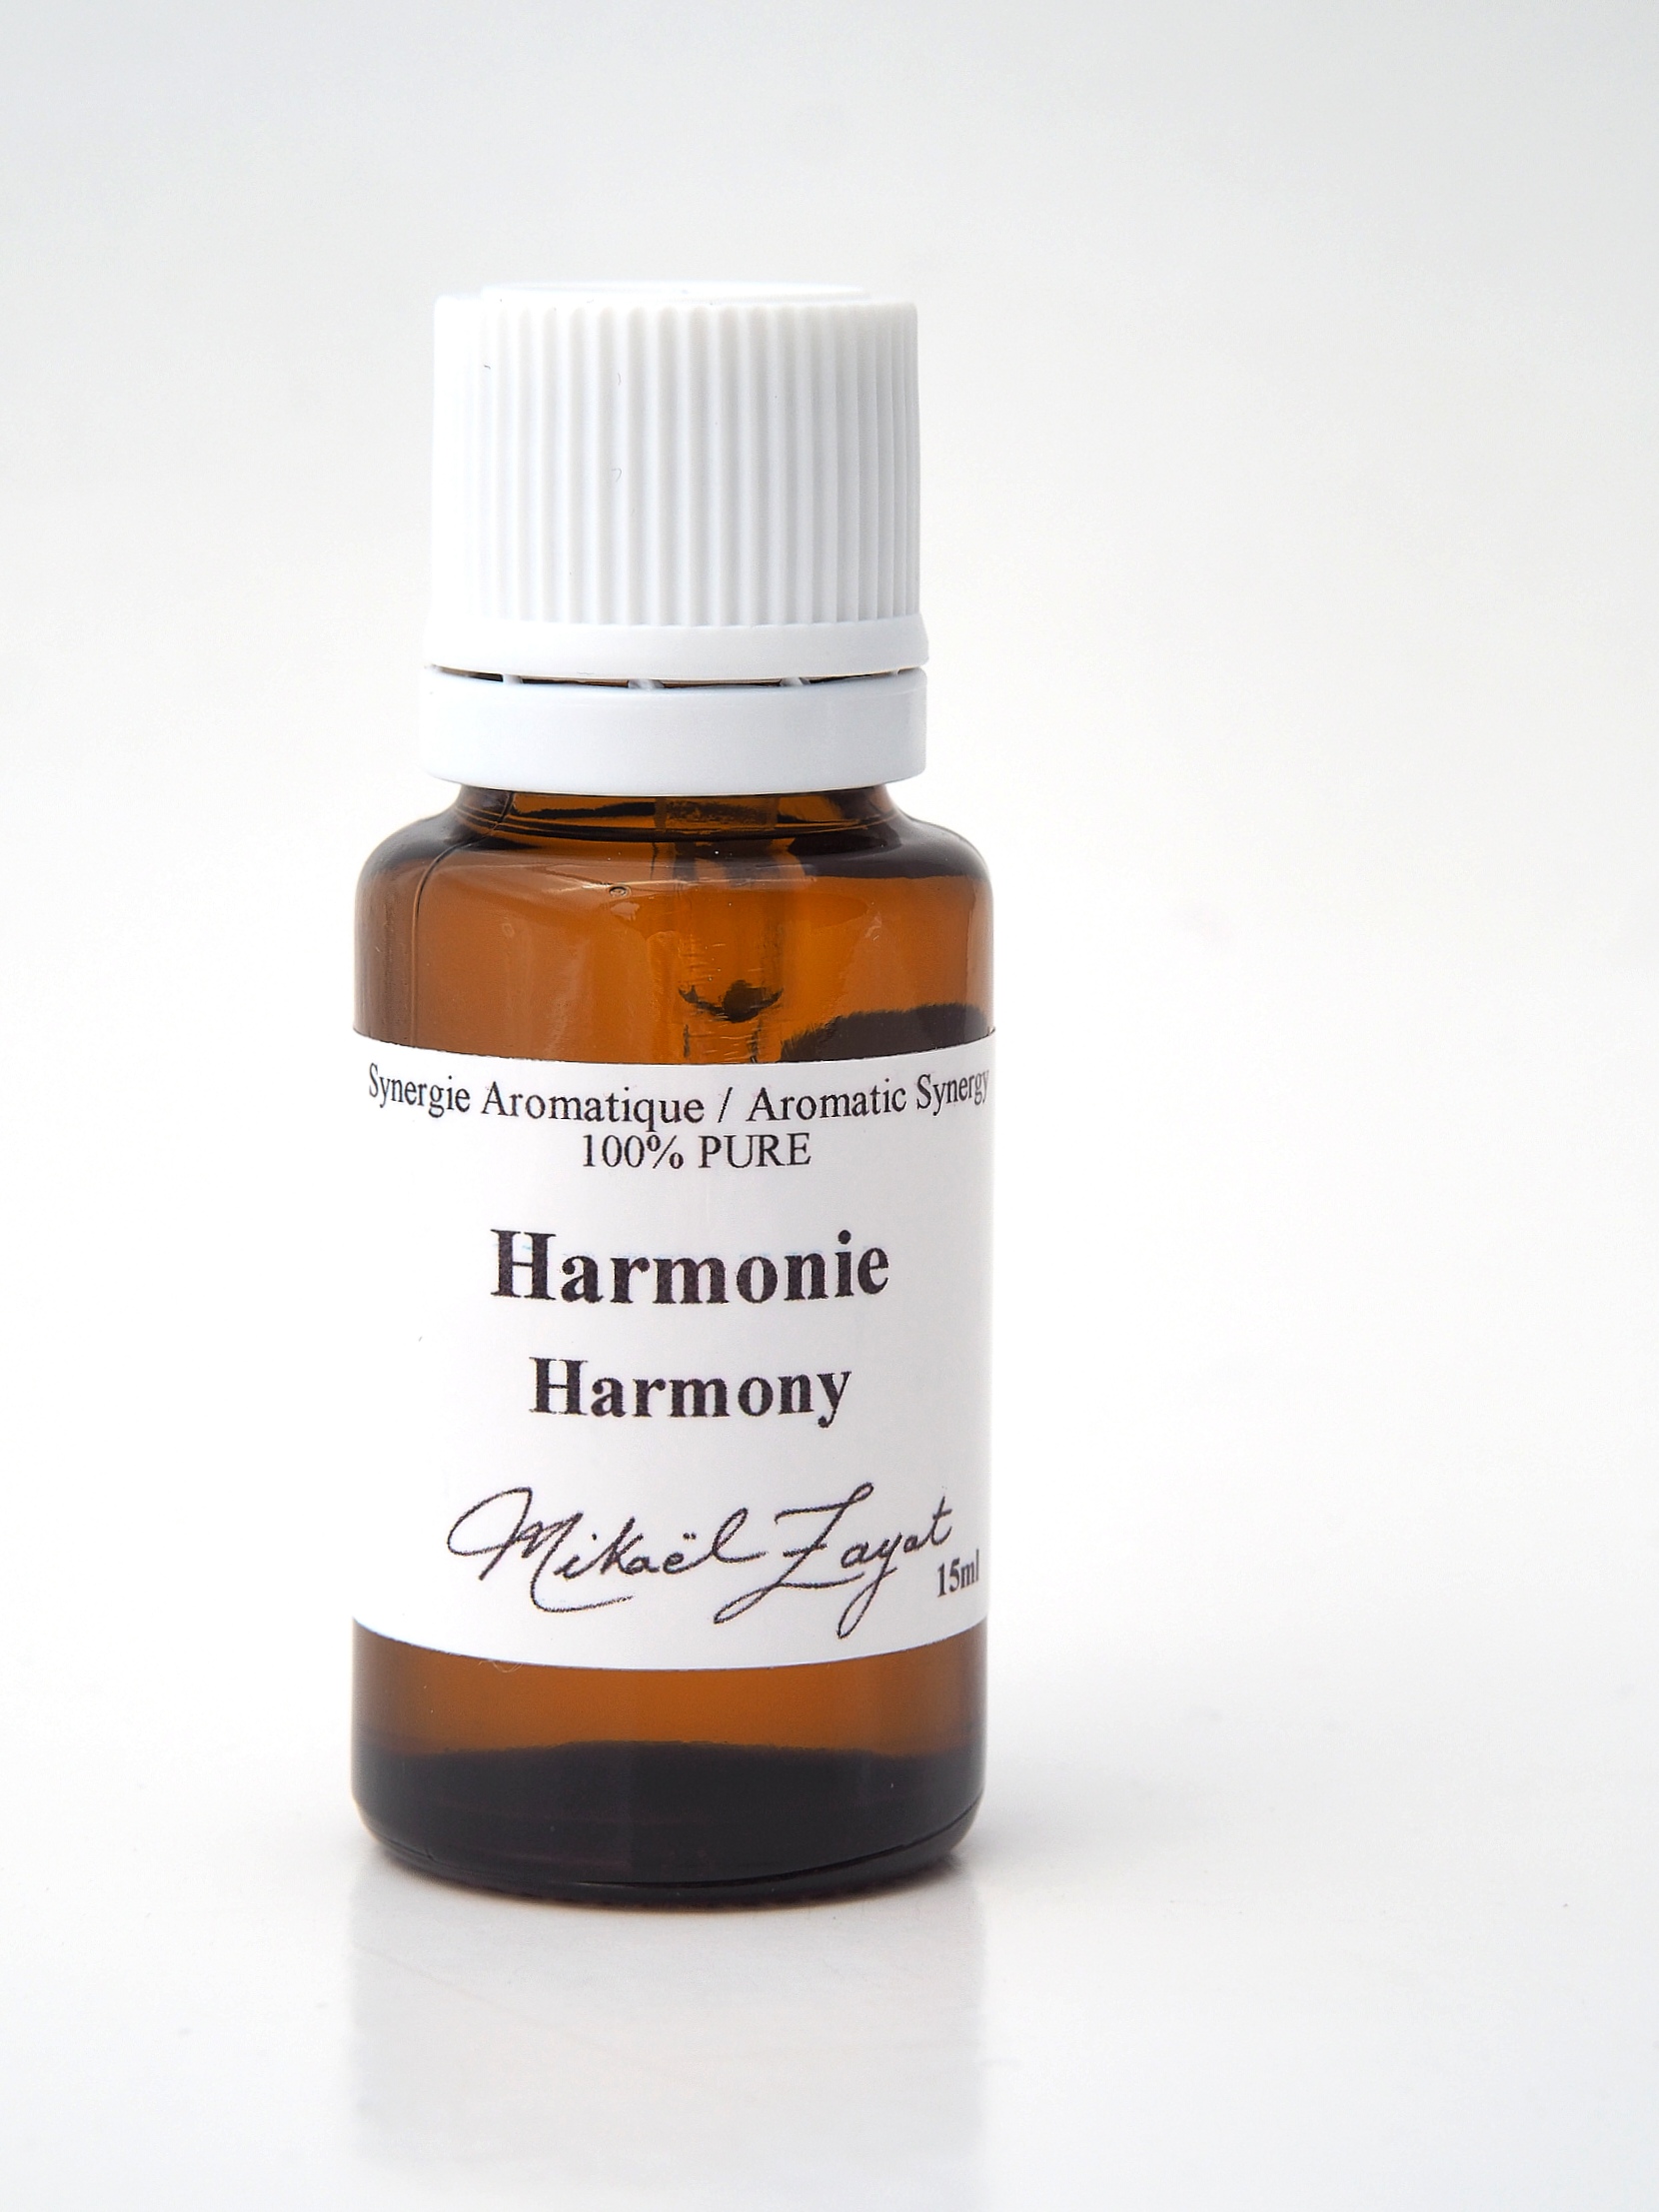 Harmonie harmony essential oils blend